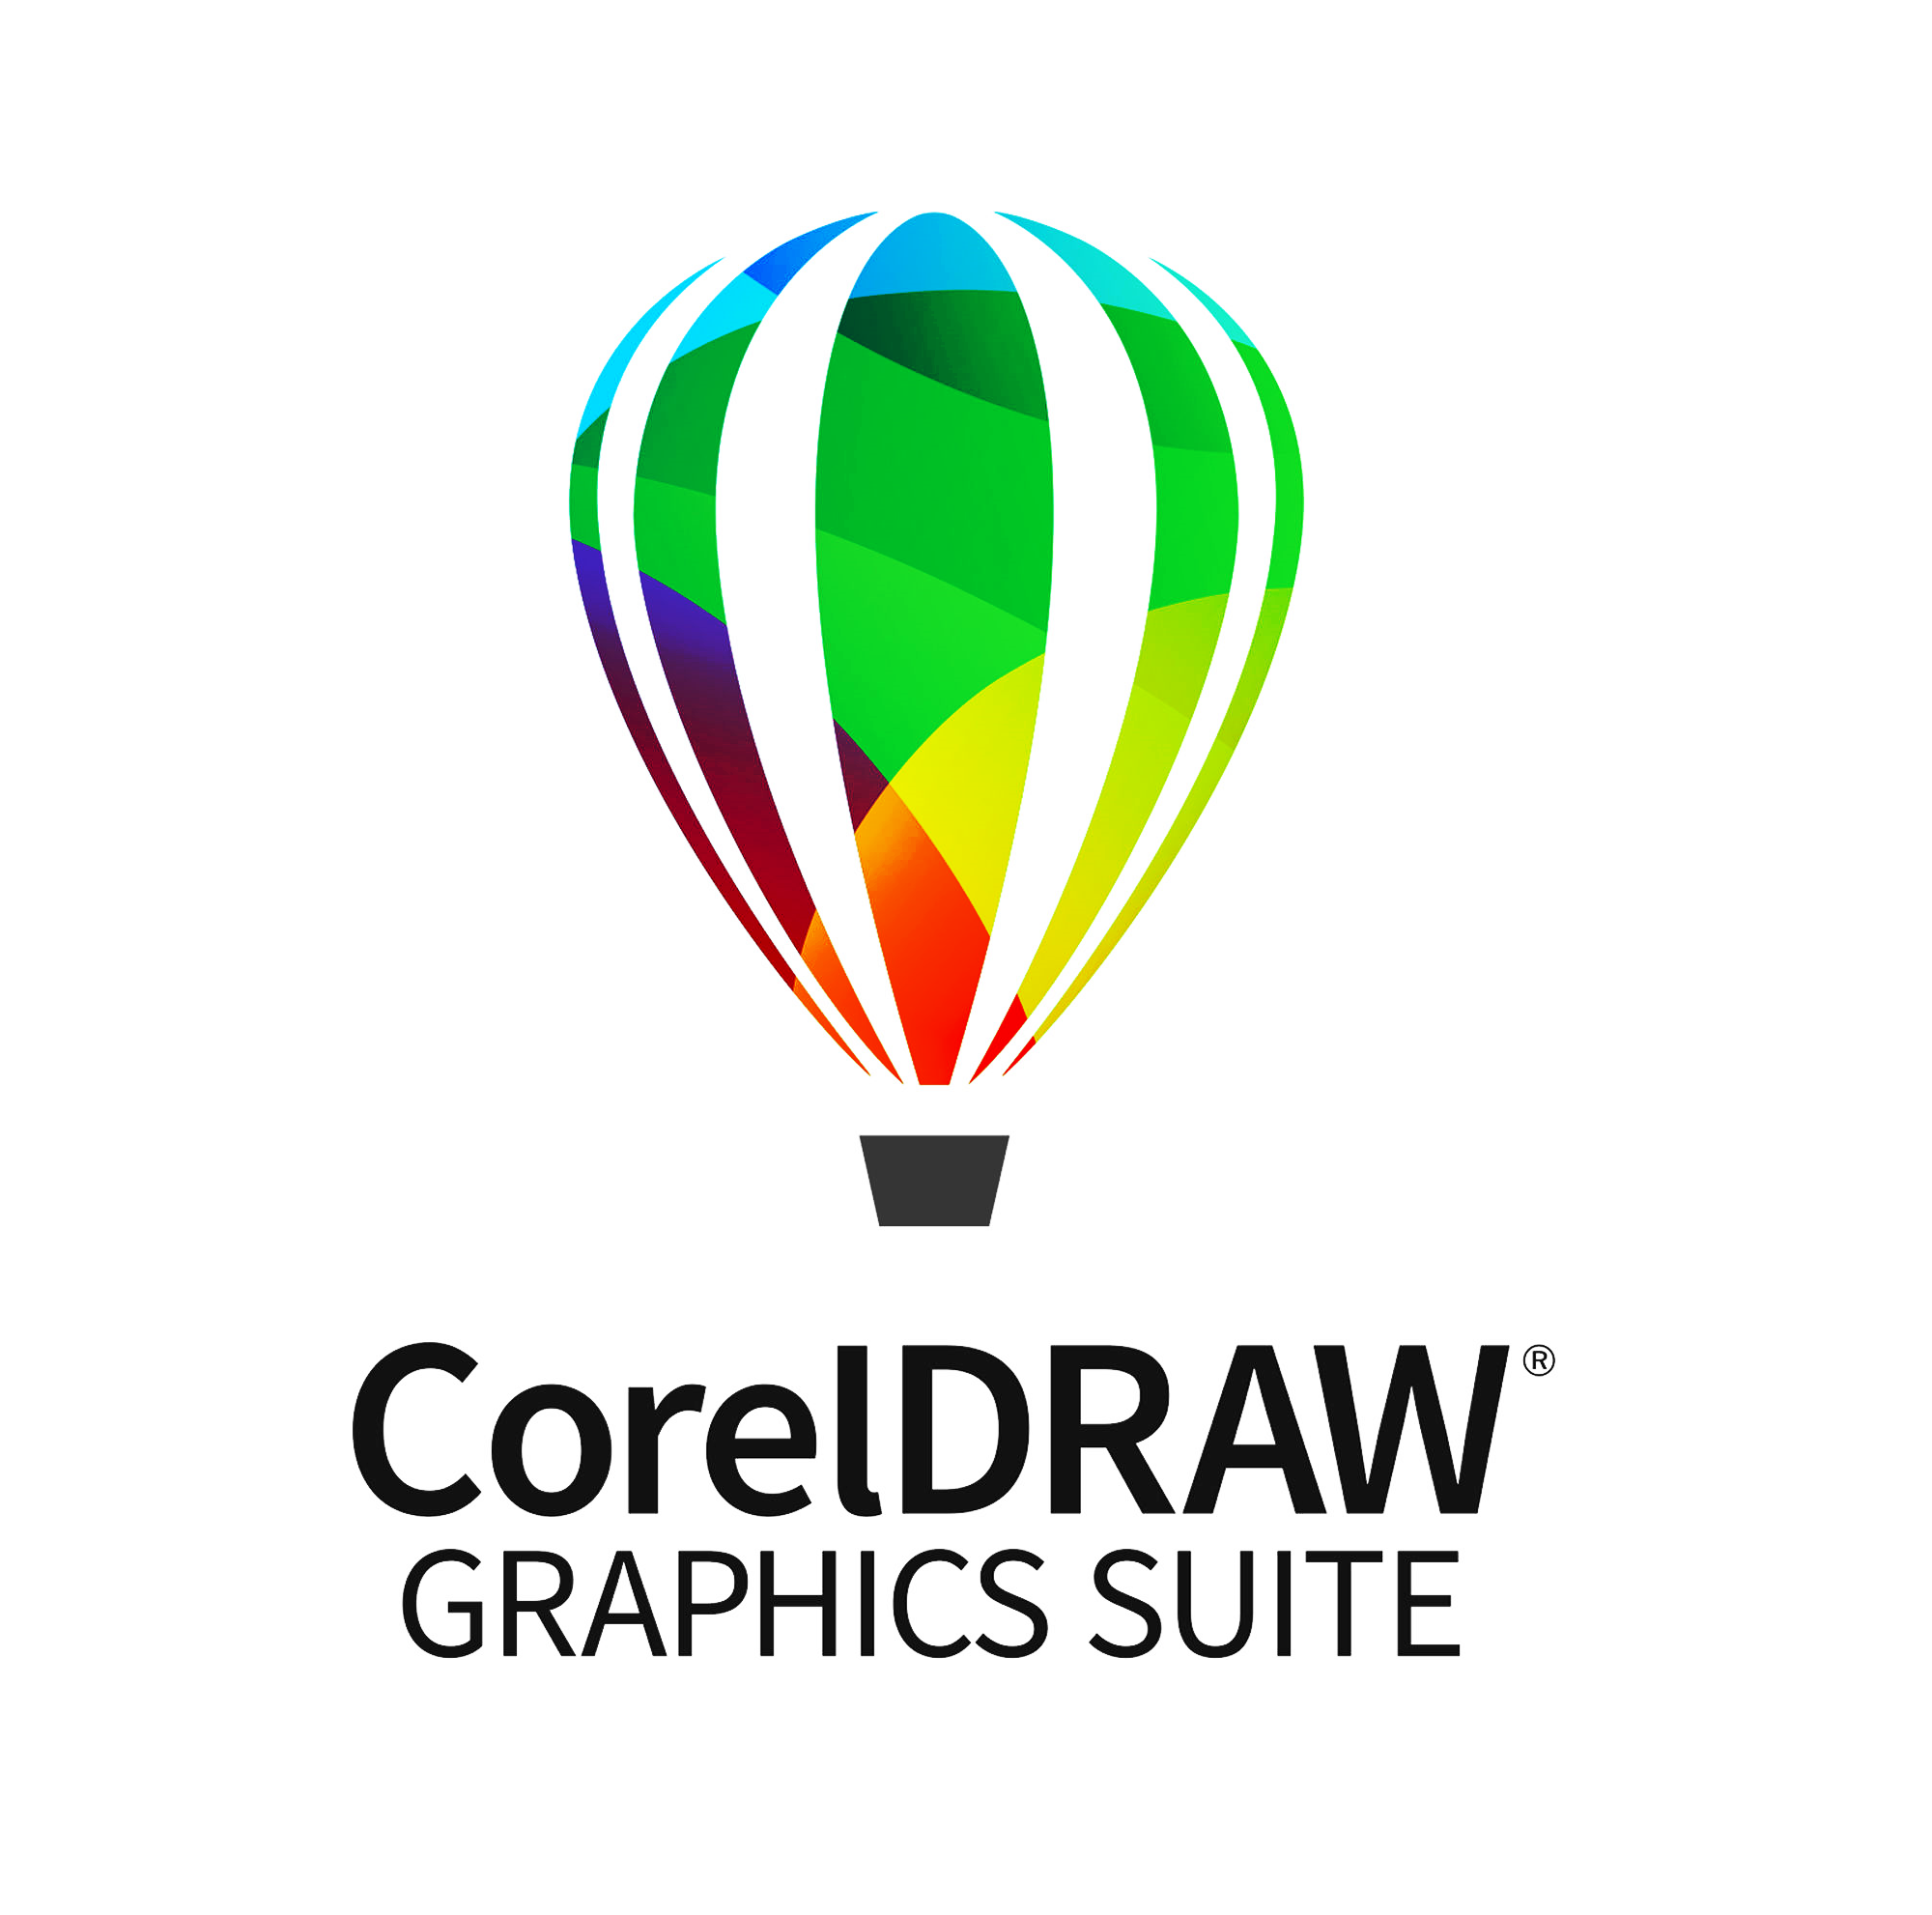 coreldraw graphics suite 2021 for windows